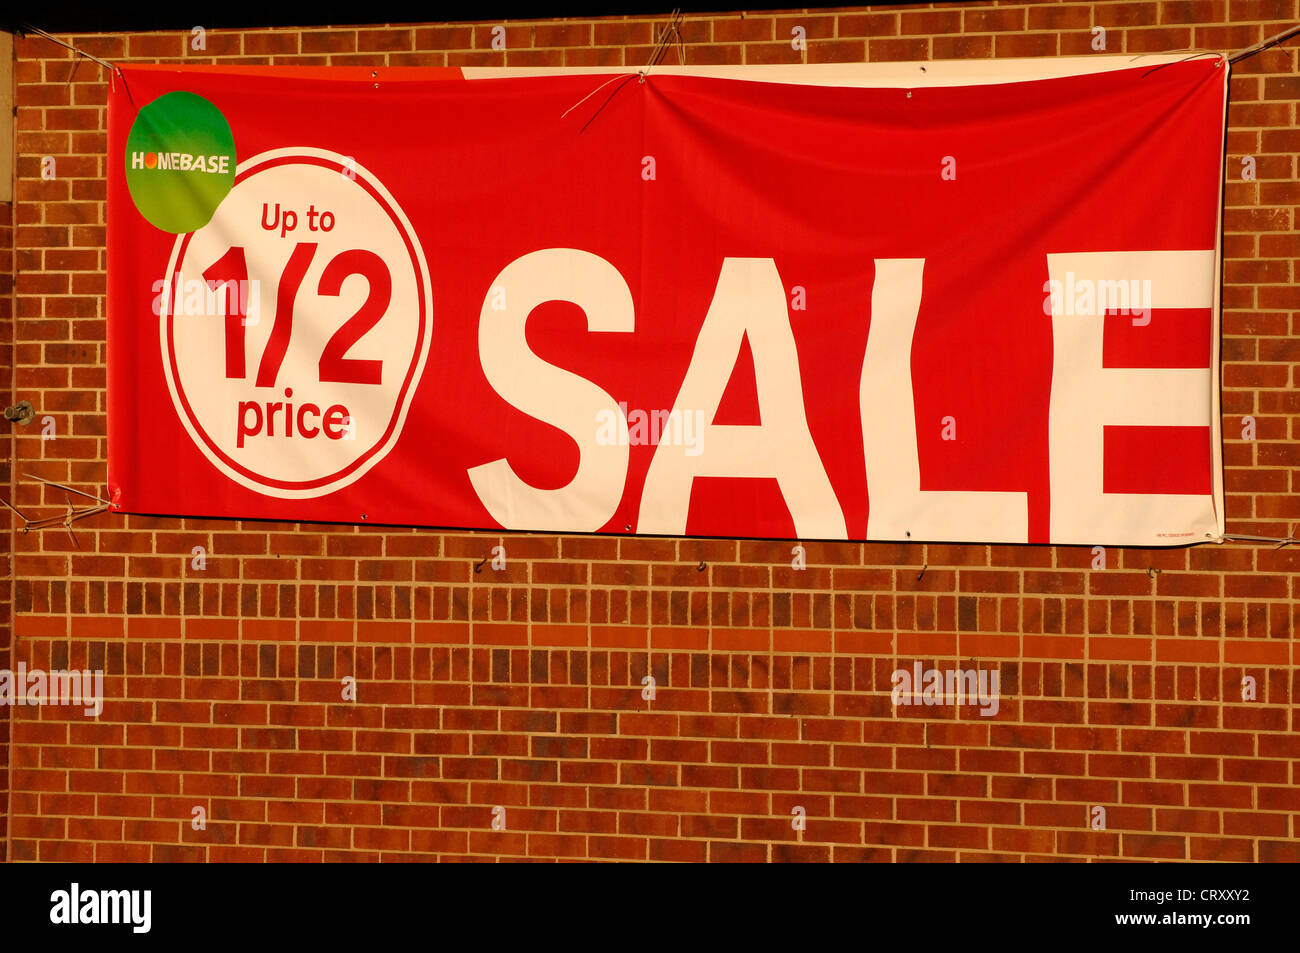 Homebase half price sale sign Stock Photo